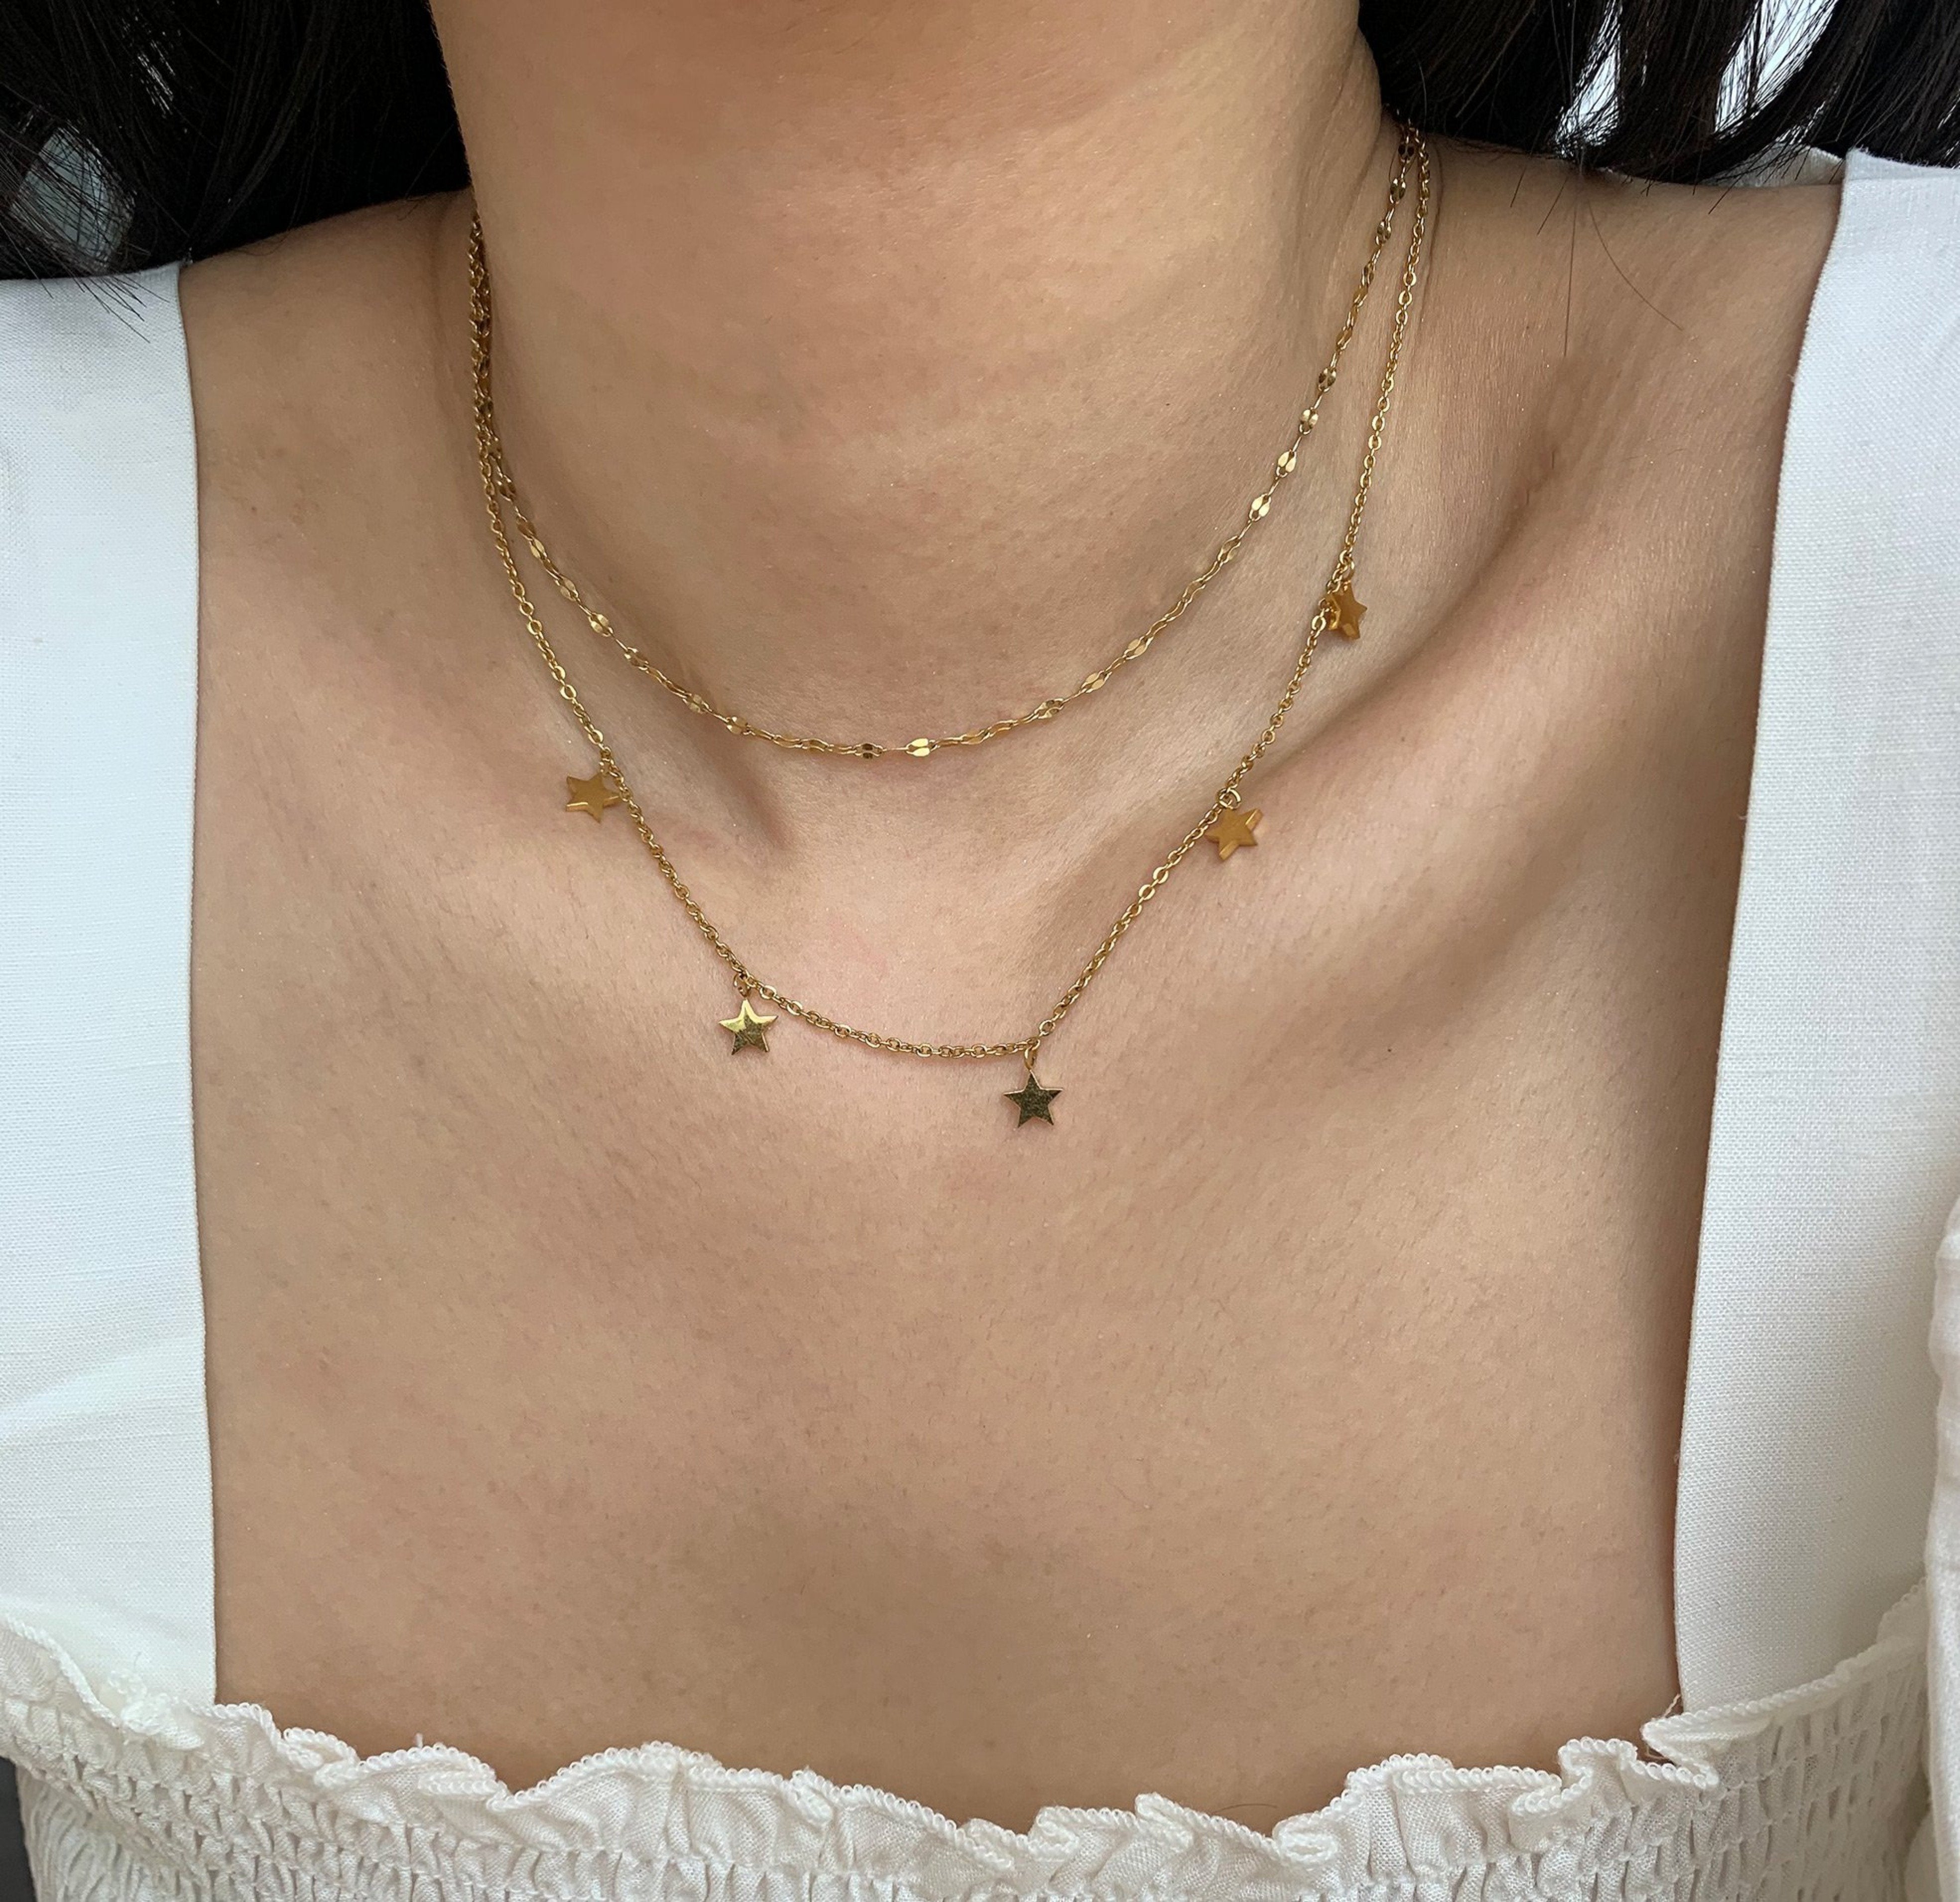 waterproof jewelry dainty chain necklace